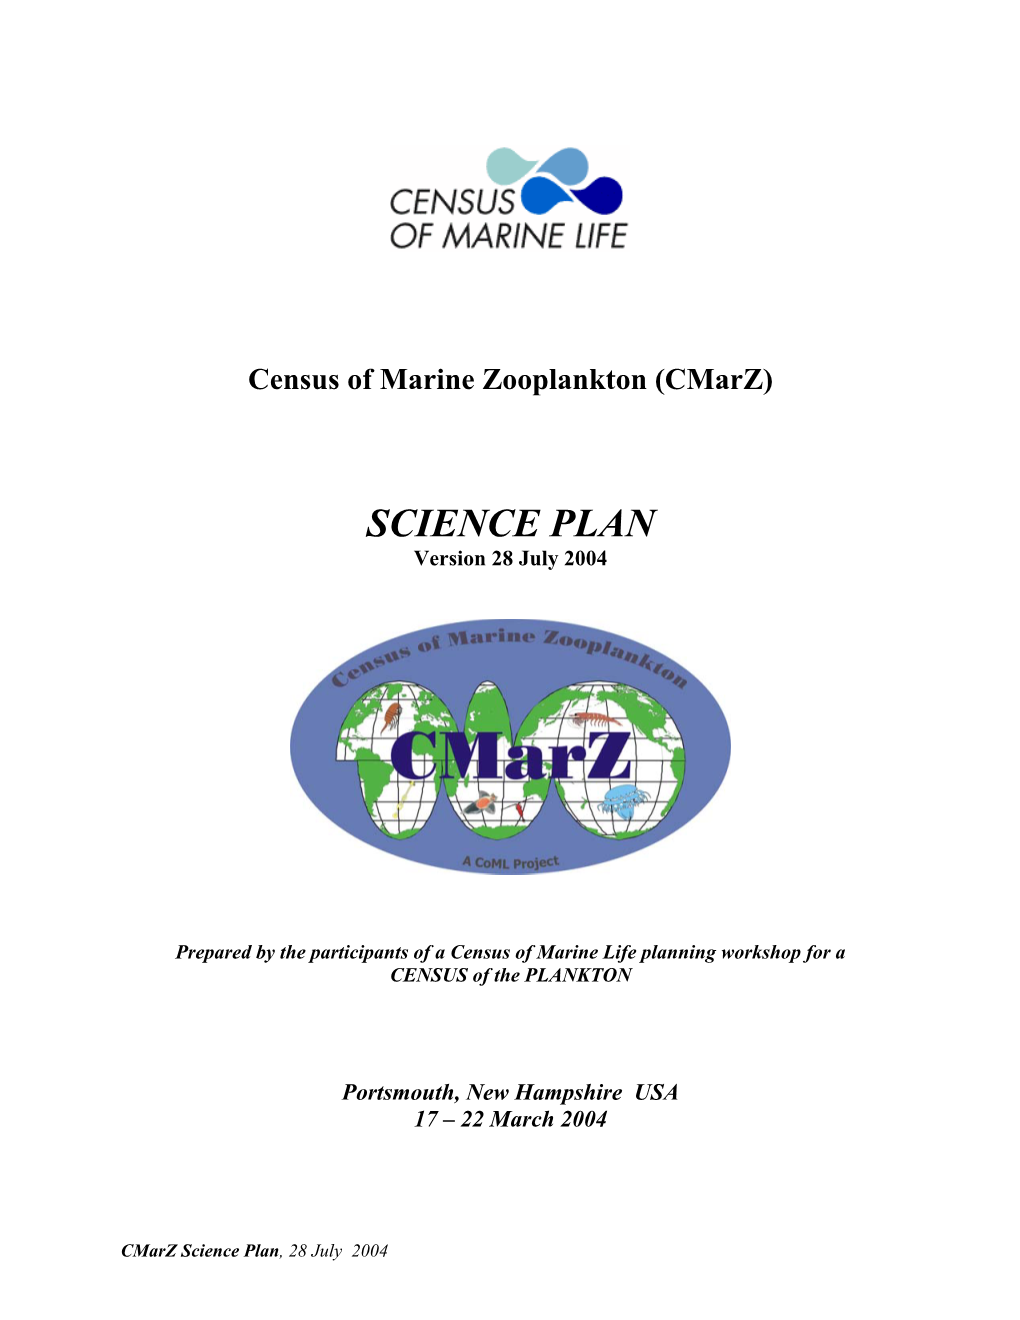 (Cmarz) Science Plan